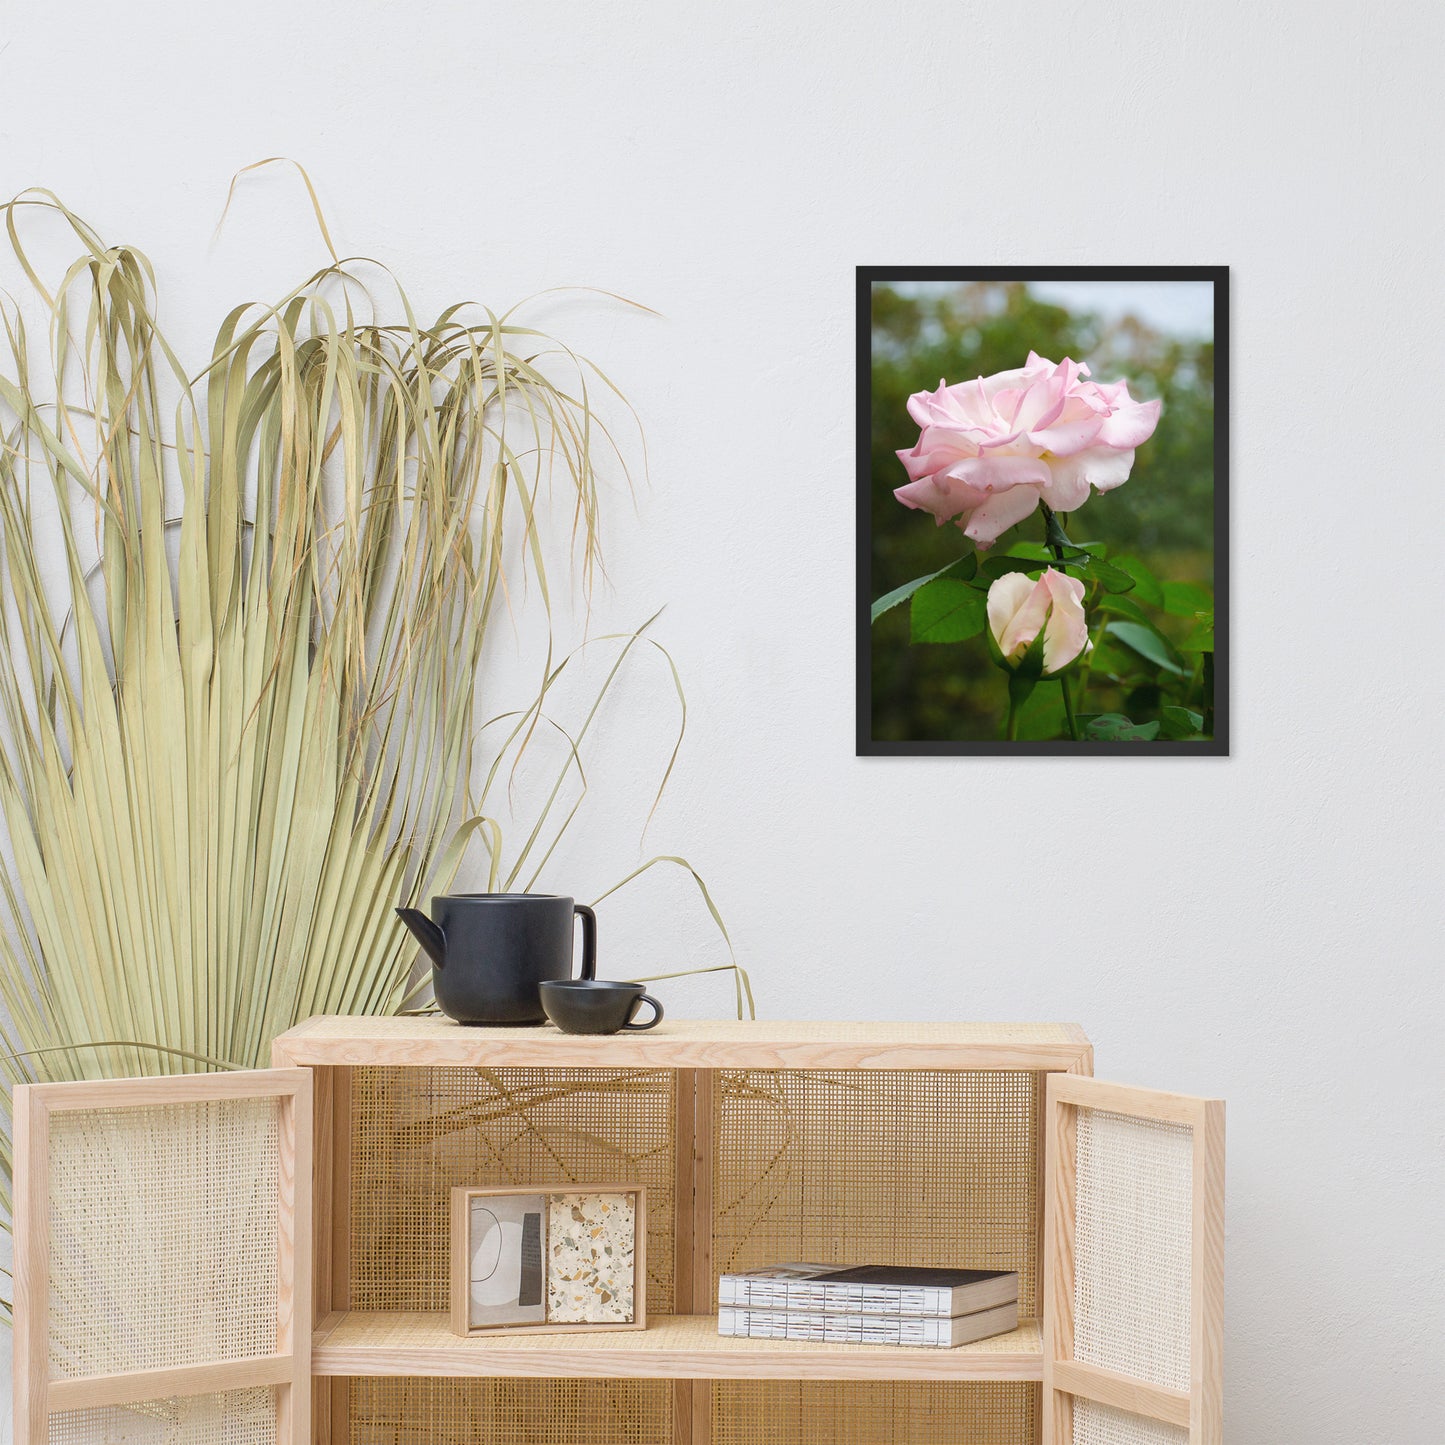 Flower Framed Prints: Admiration - Pink Rose Floral / Botanical / Nature Photo Framed Wall Art Print - Artwork - Wall Decor - Home Decor